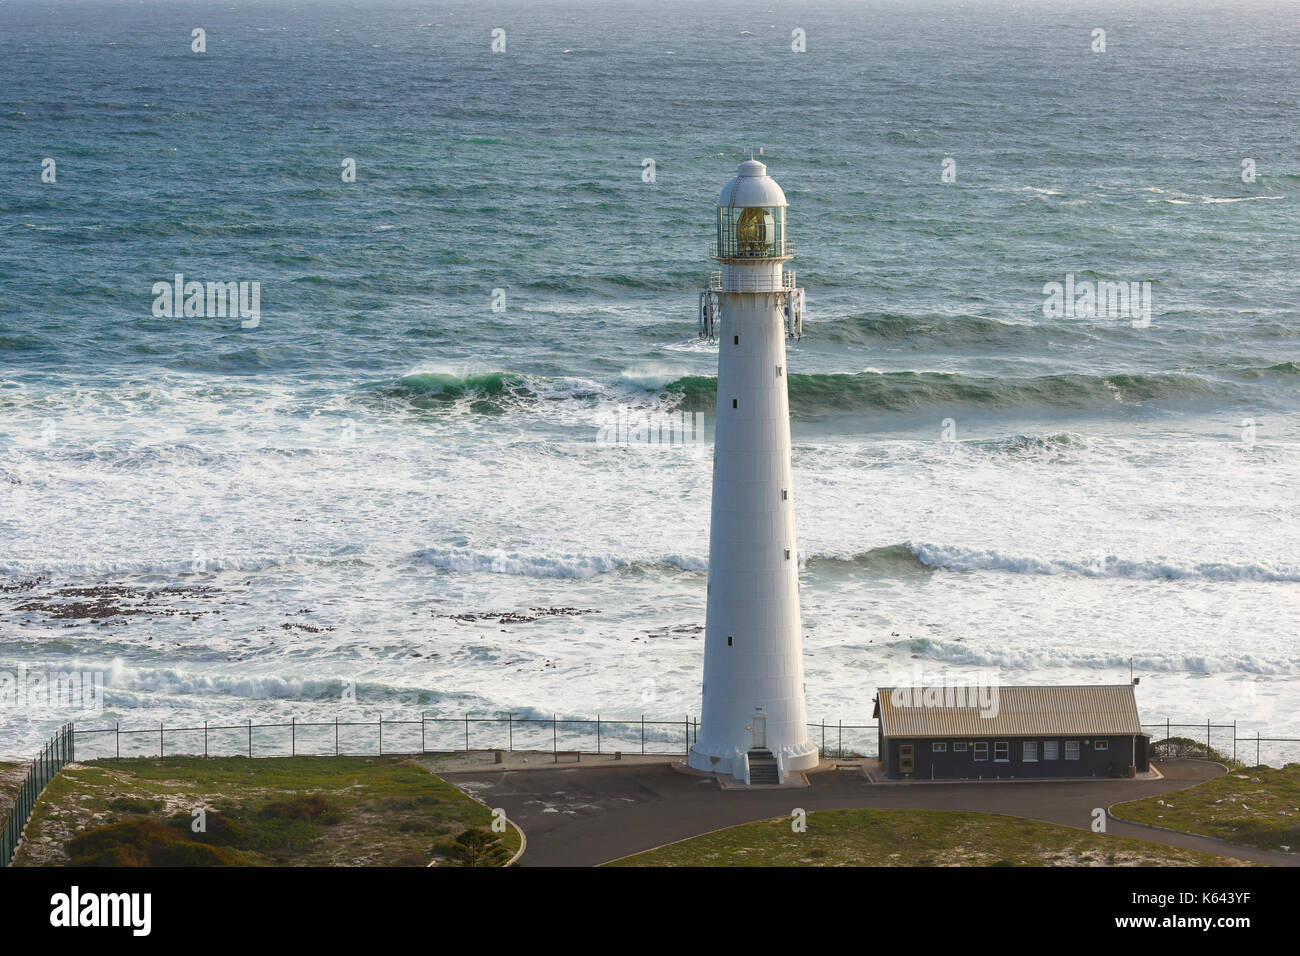 Slangkop Lighthouse, Kommetjie, Cape Peninsula, South Africa Stock Photo